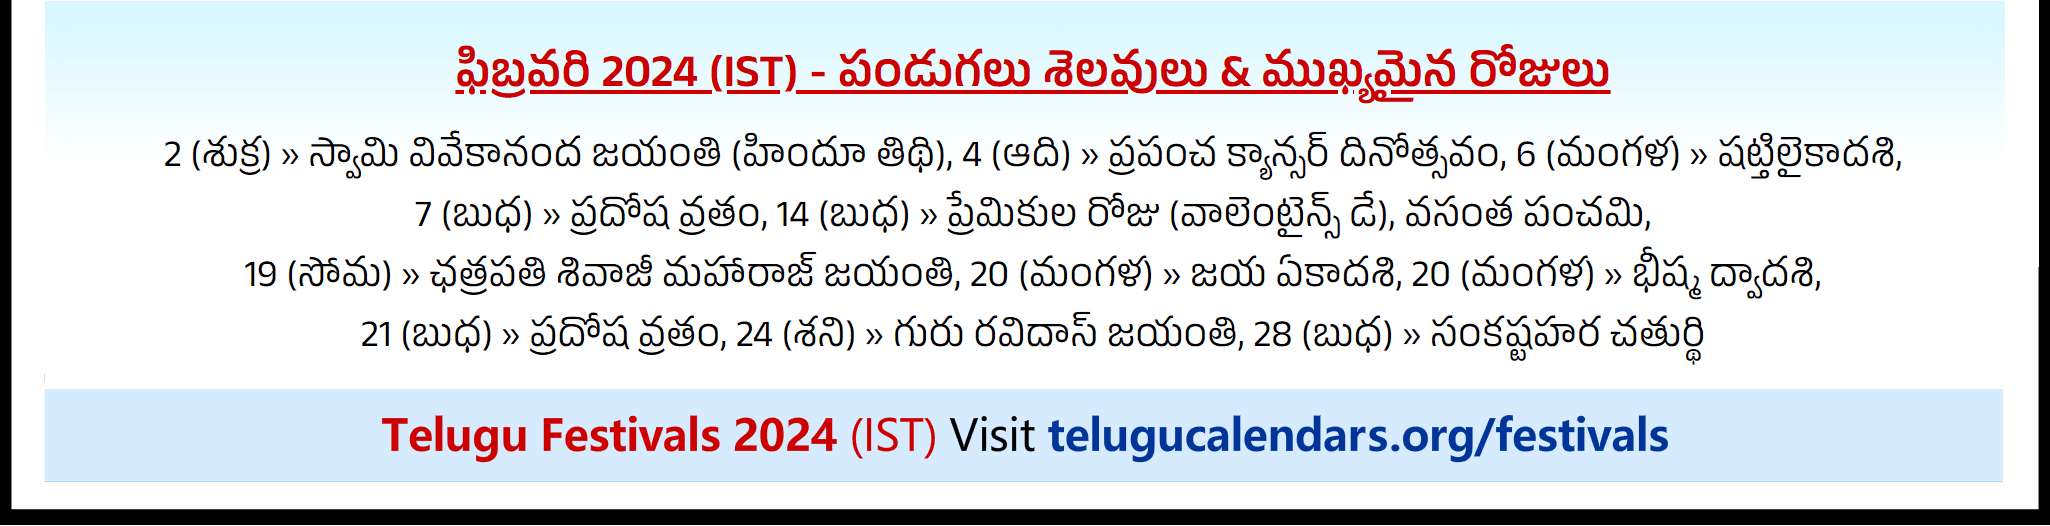 Telugu Festivals 2024 February New York